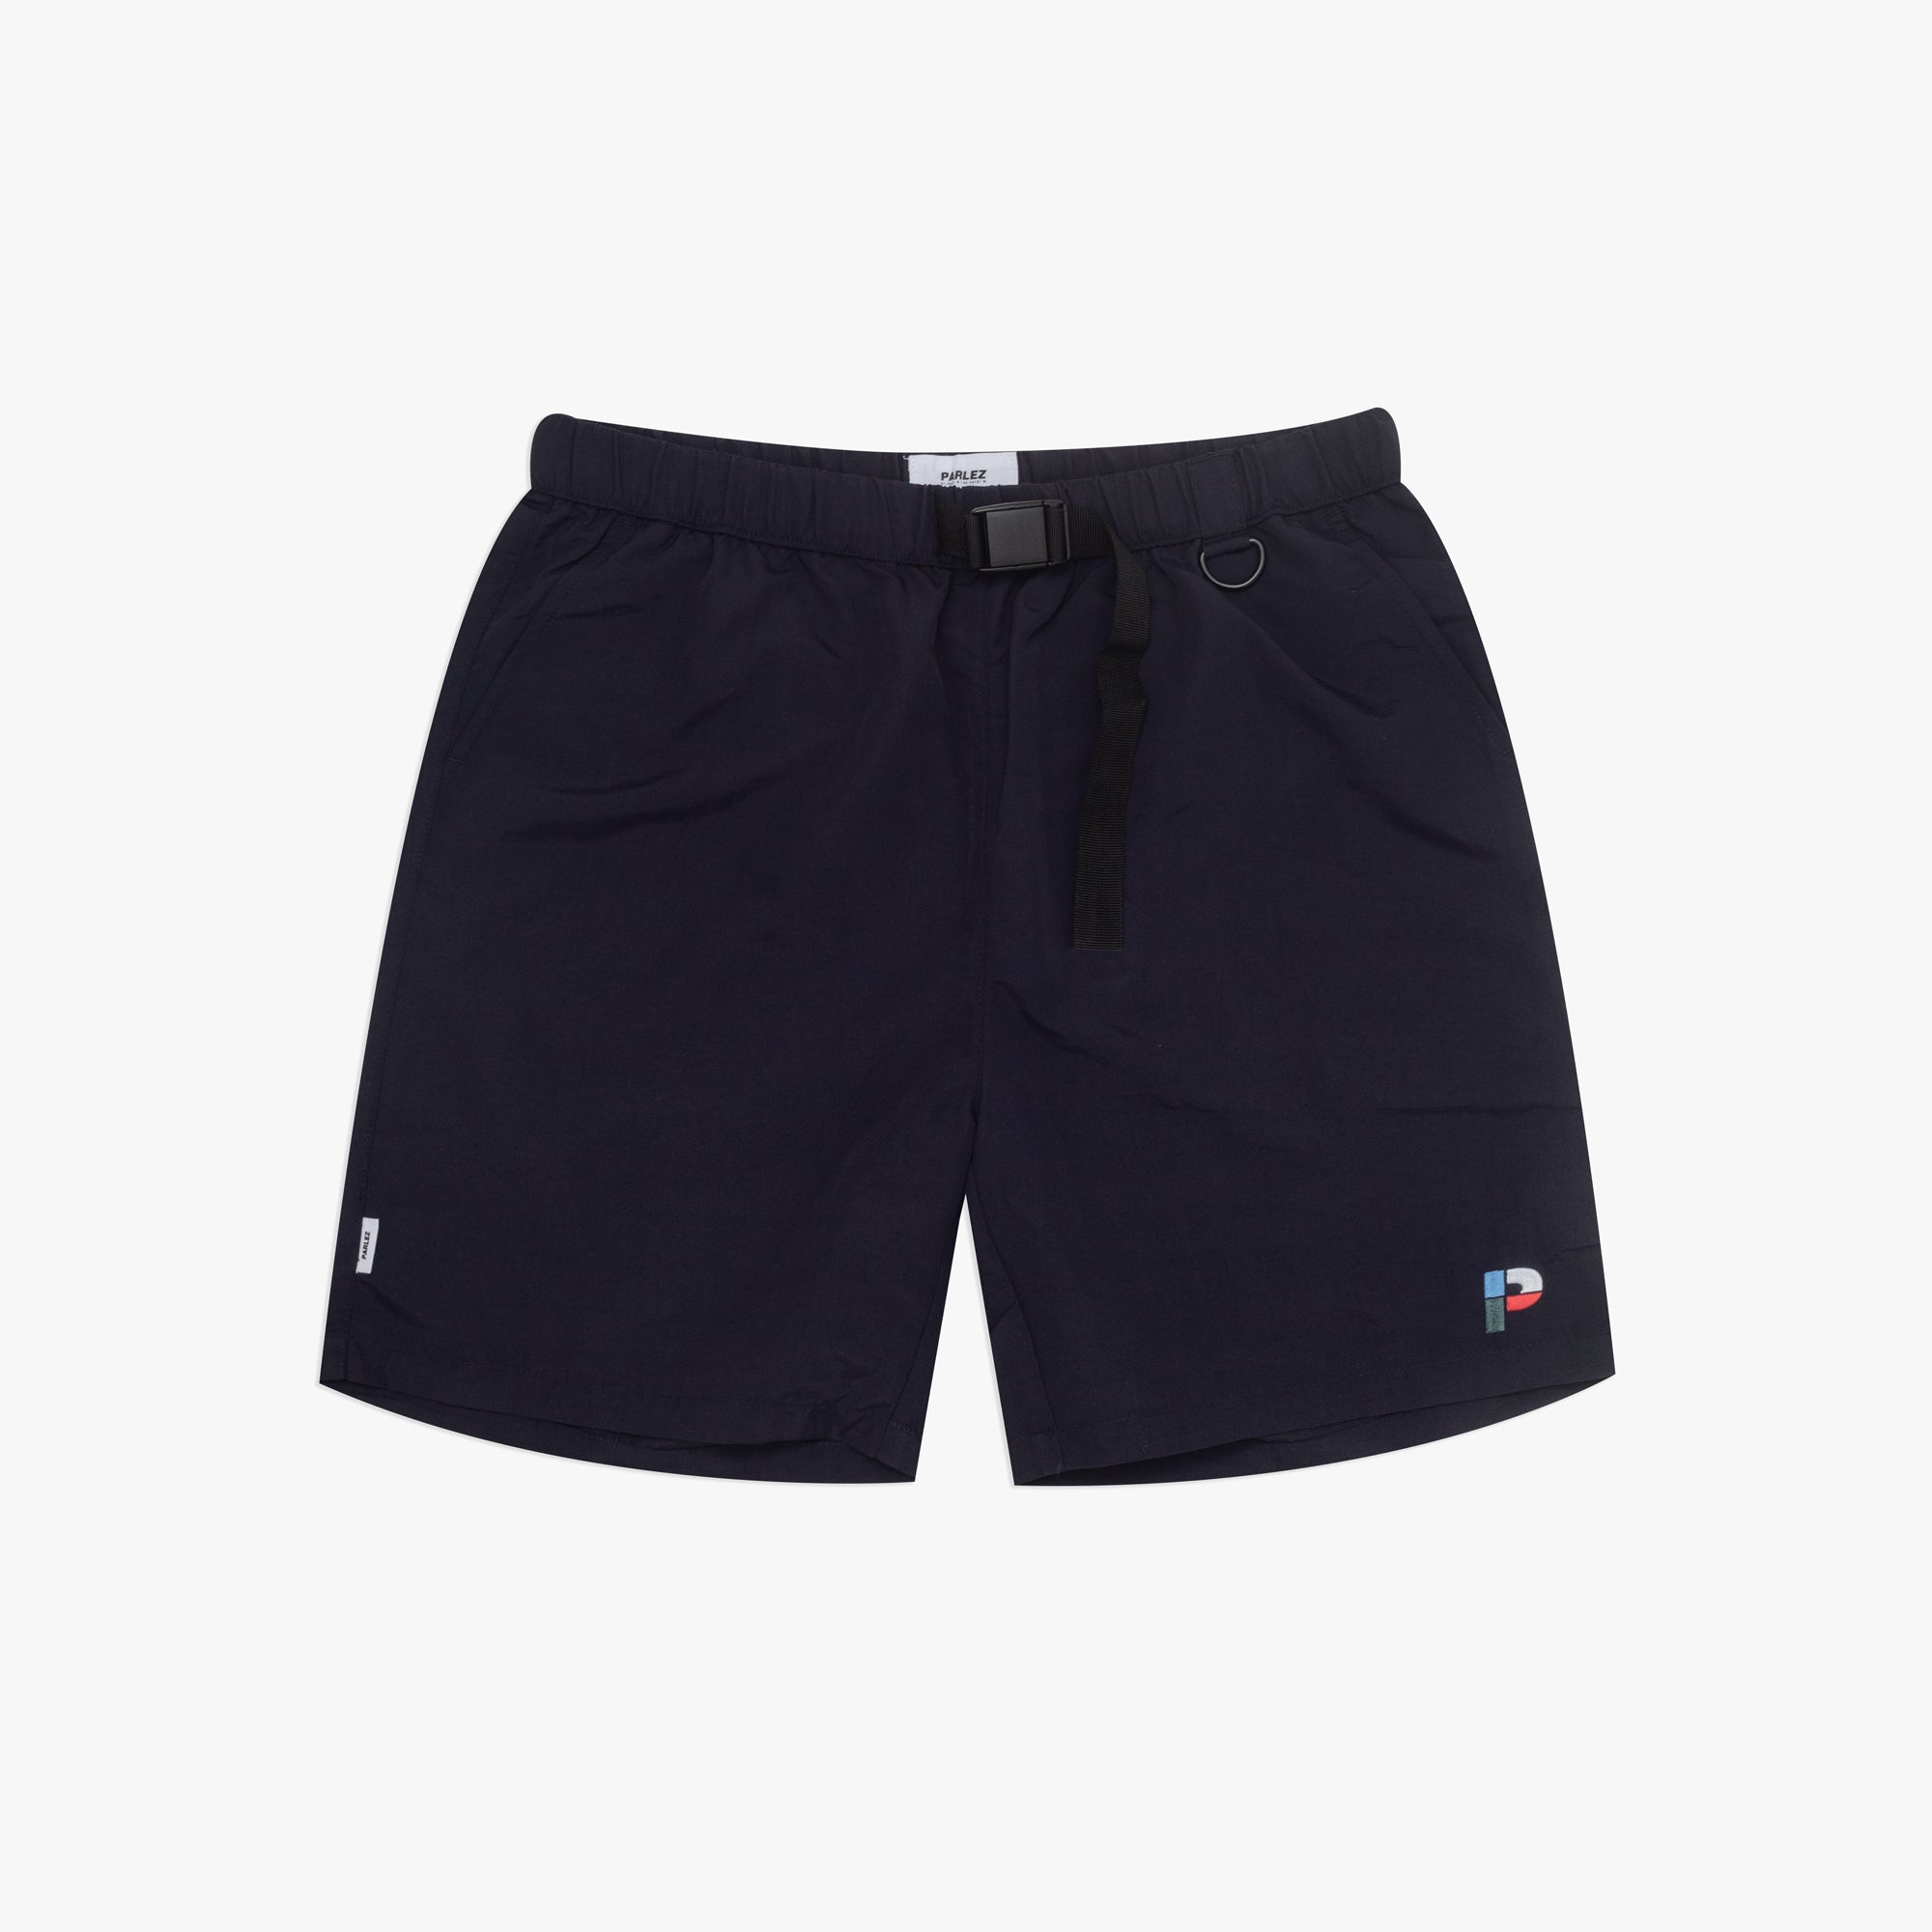 Buy The Parlez Hage Shorts Navy | Parlez Streetwear – parlez-uk